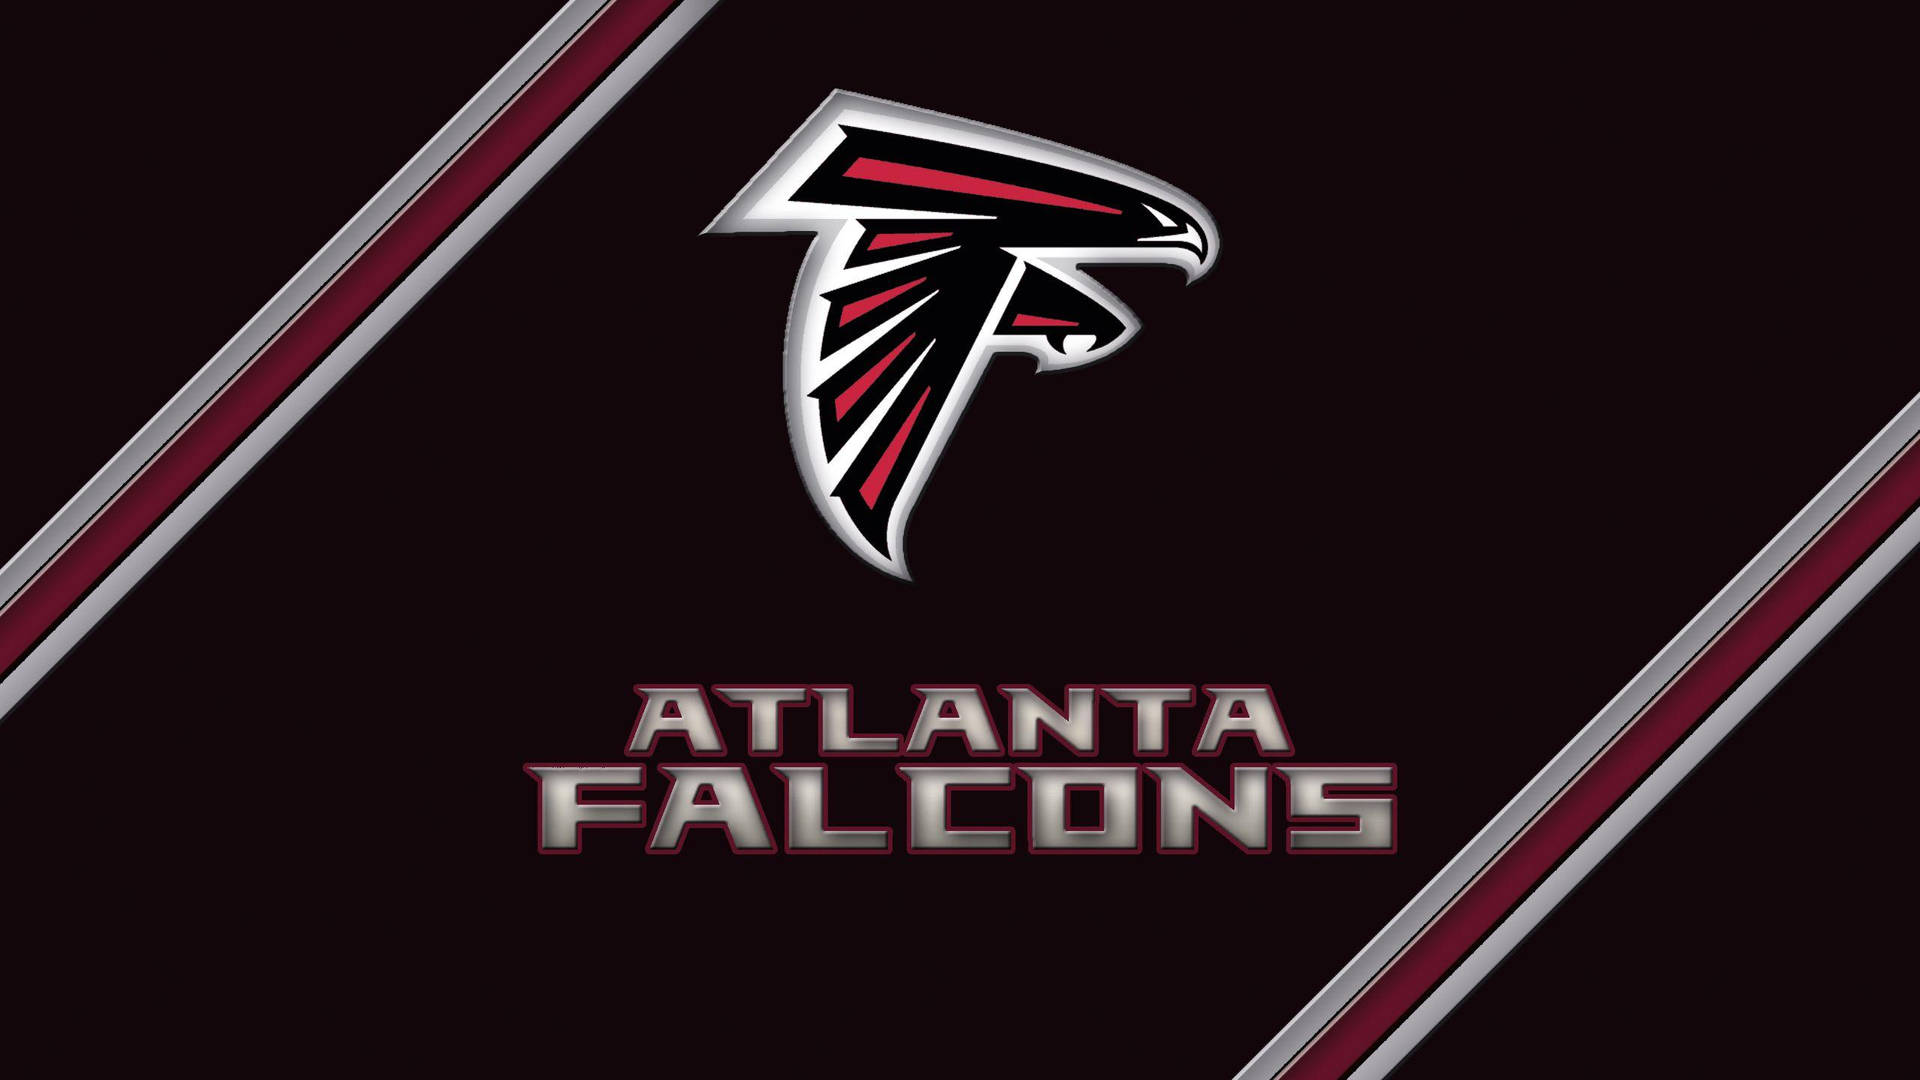 Atlantafalcons Bildunterschrift Mit Logo Wallpaper